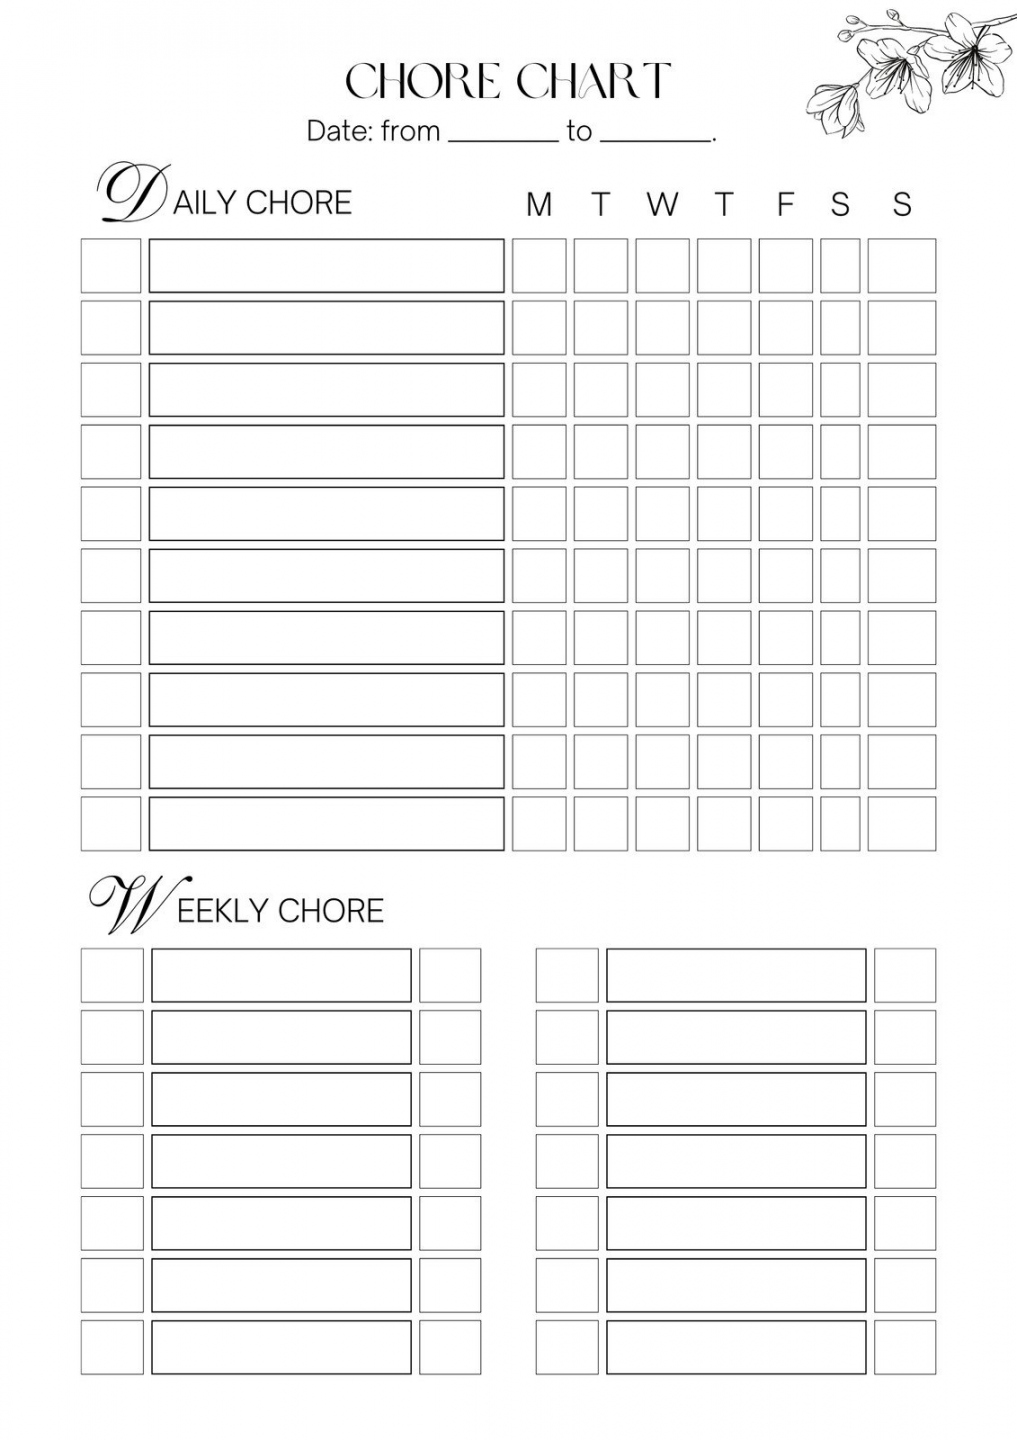 Free customizable chore chart templates to print  Canva - FREE Printables - Chore Chart Free Printable